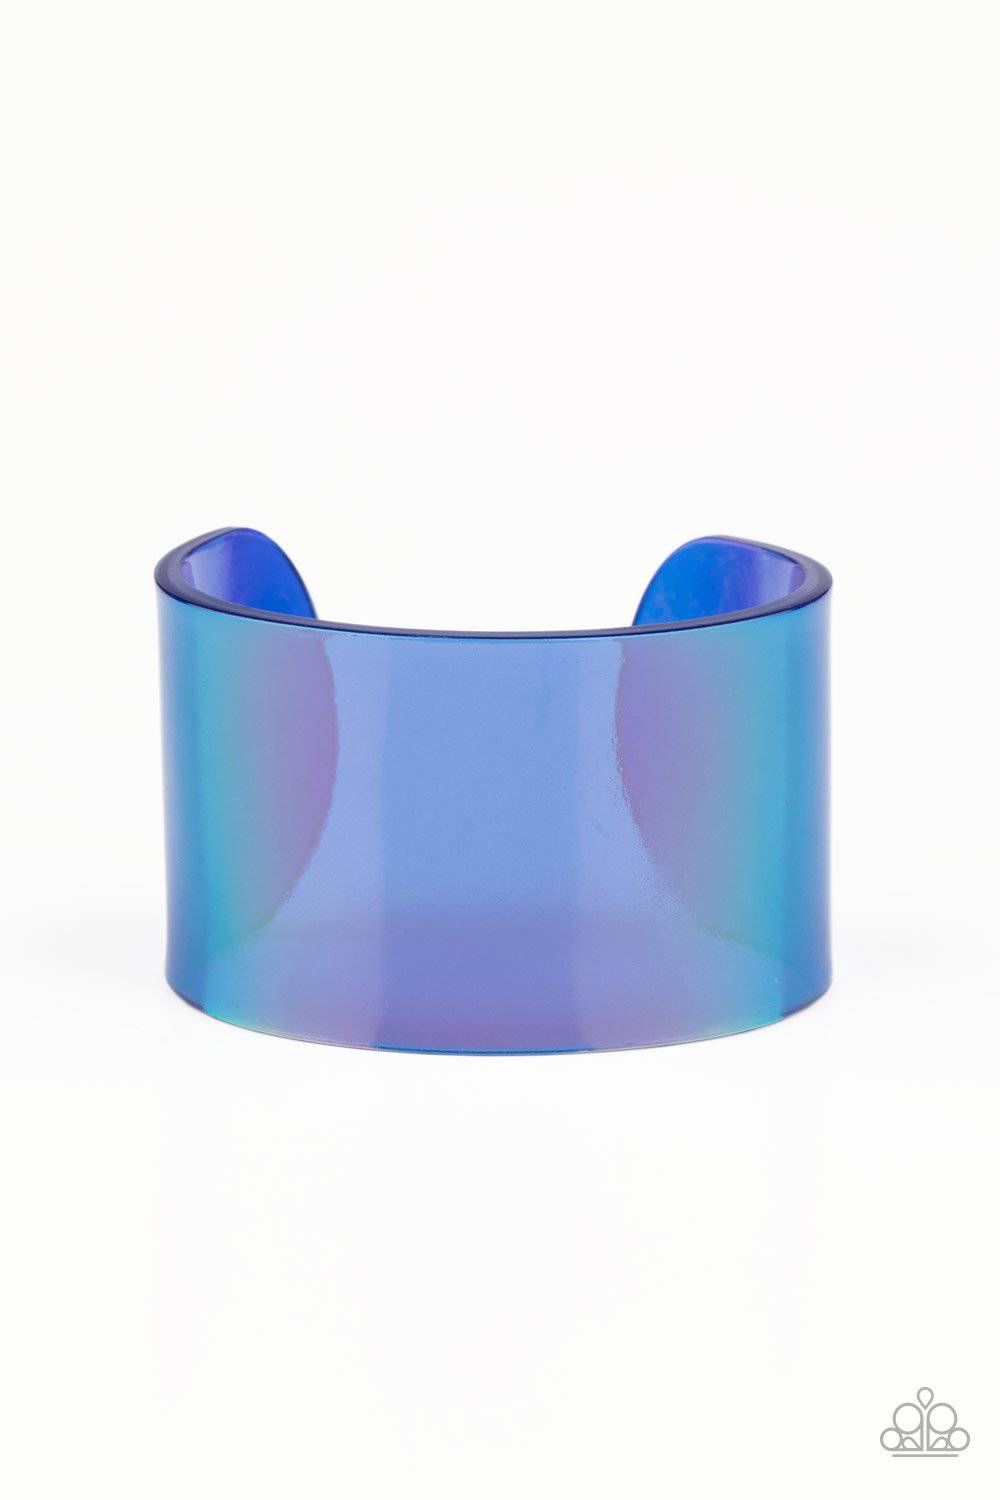 B153 - Holographic Aura Blue Acrylic Bracelet by Paparazzi Accessories on Fancy5Fashion.com